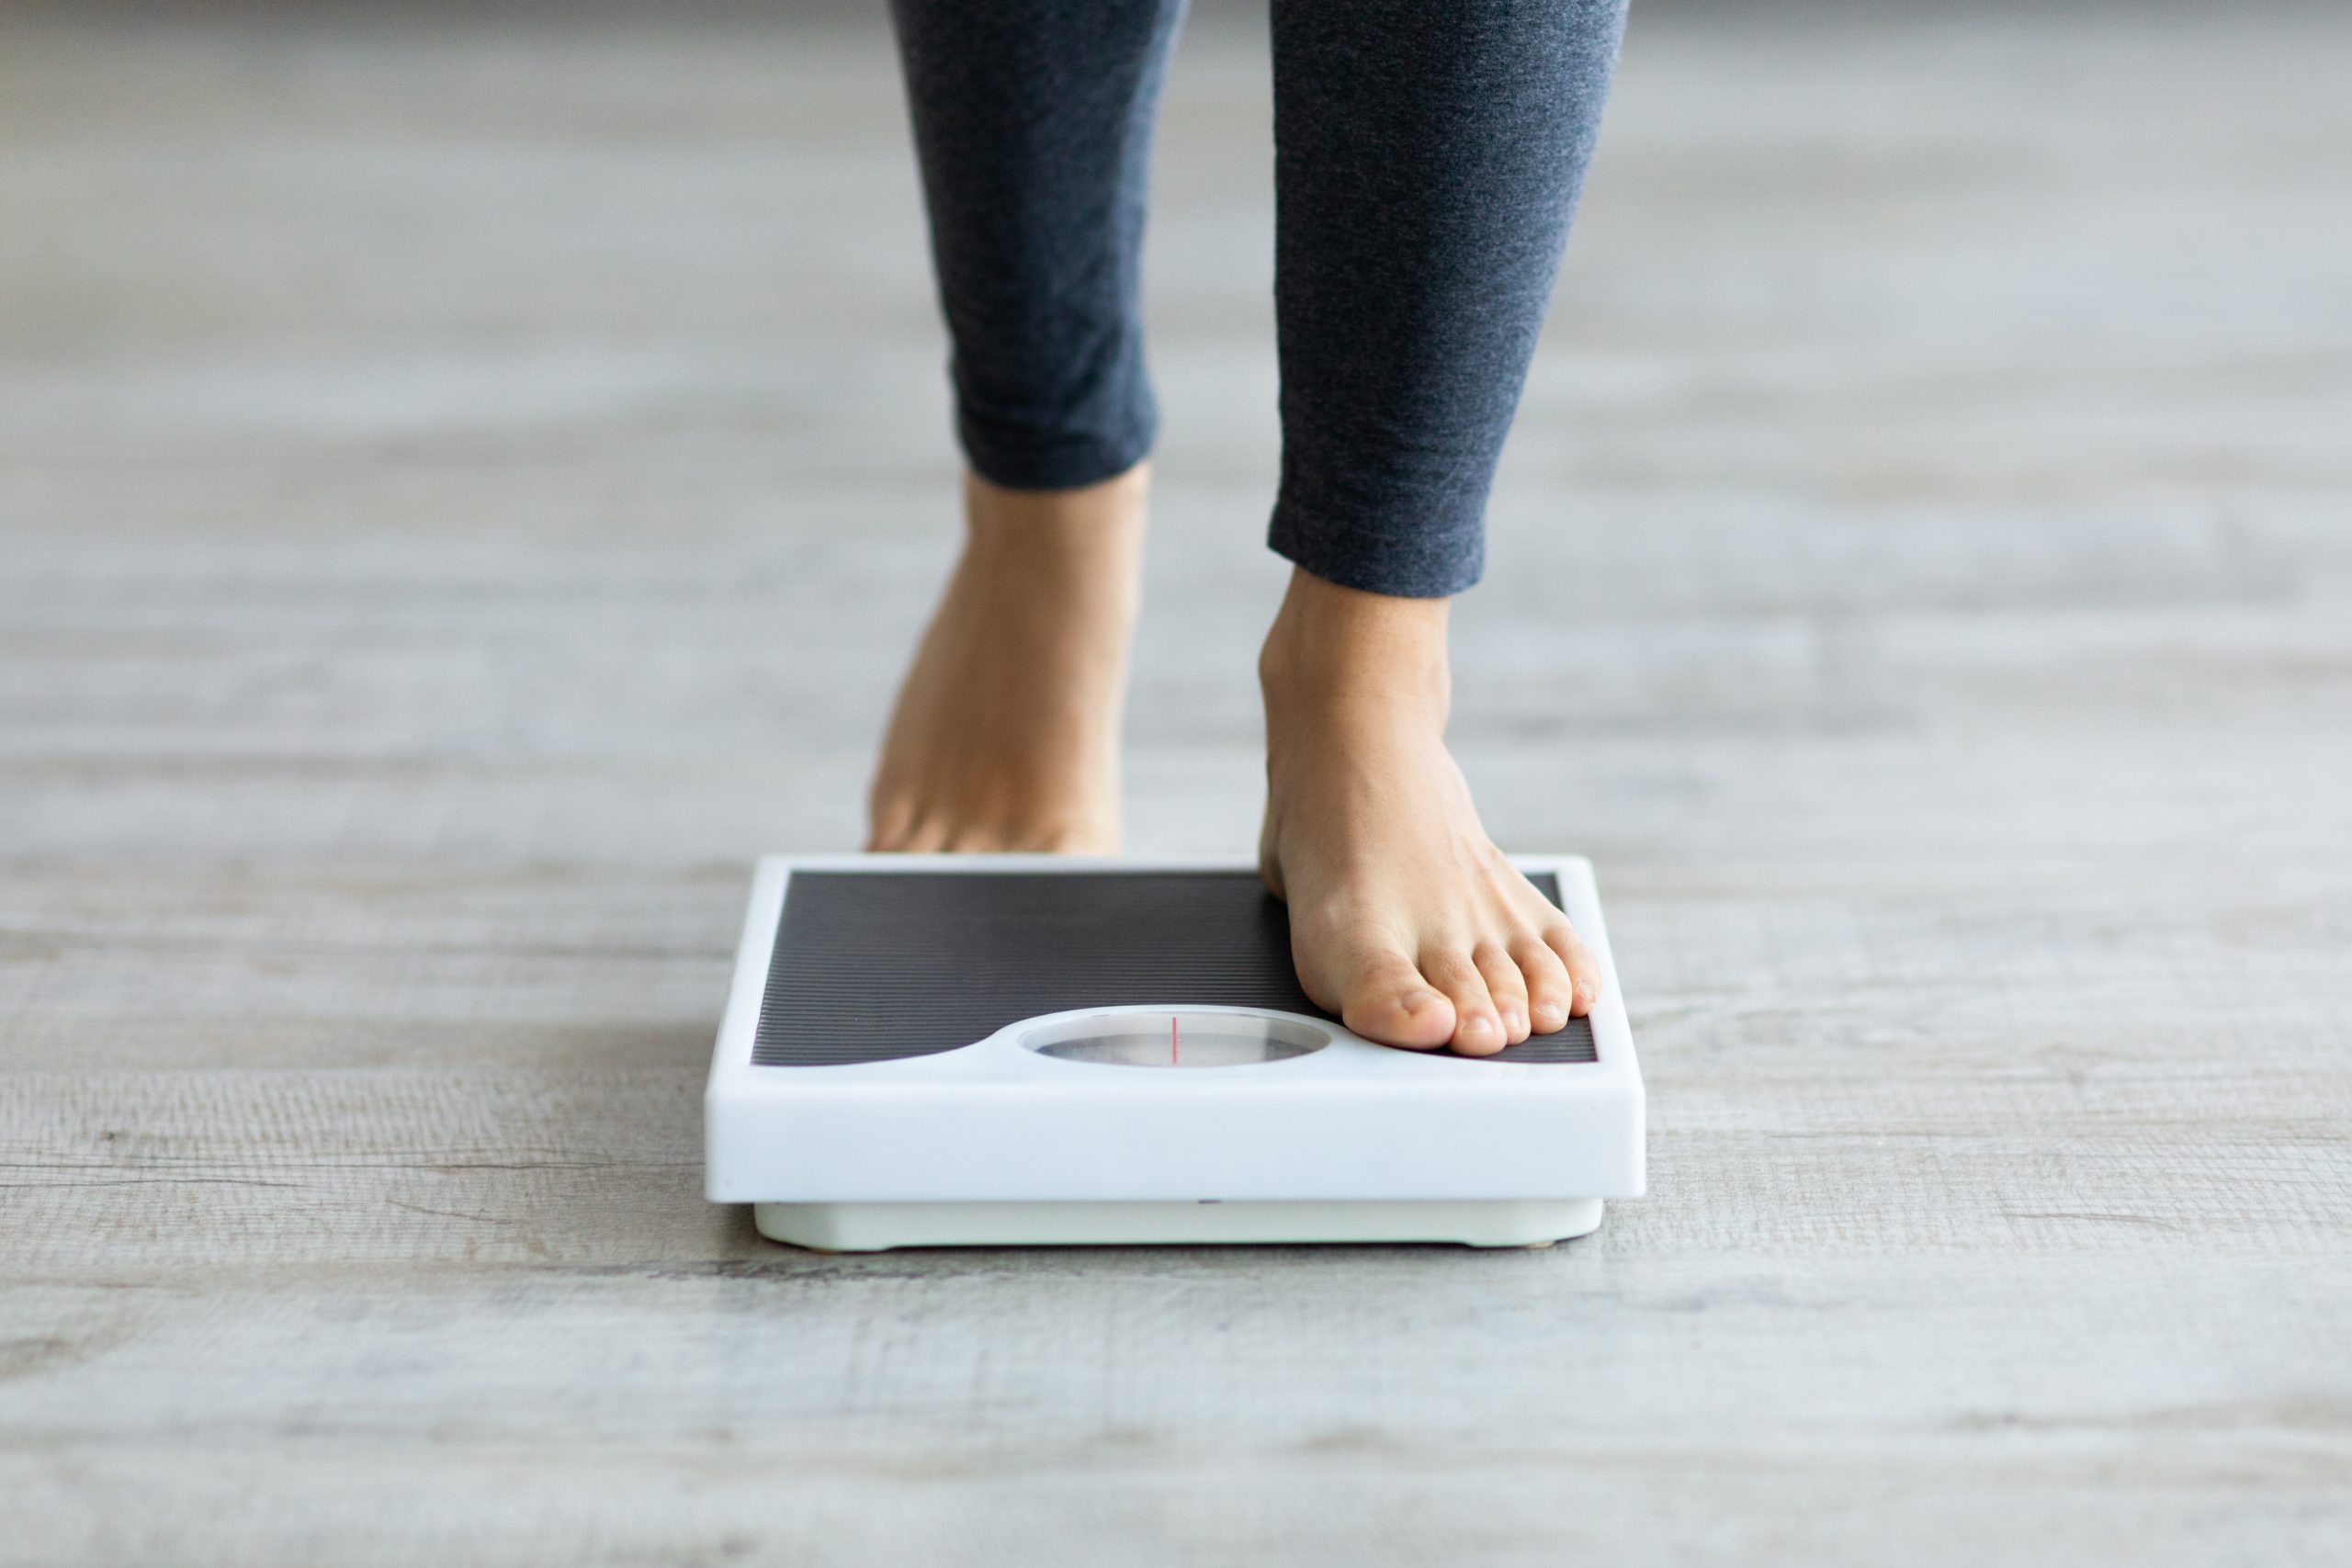 Vaga za merenje telesne težine: 7 stvari koje morate znati pre nego što počnete s merenjem